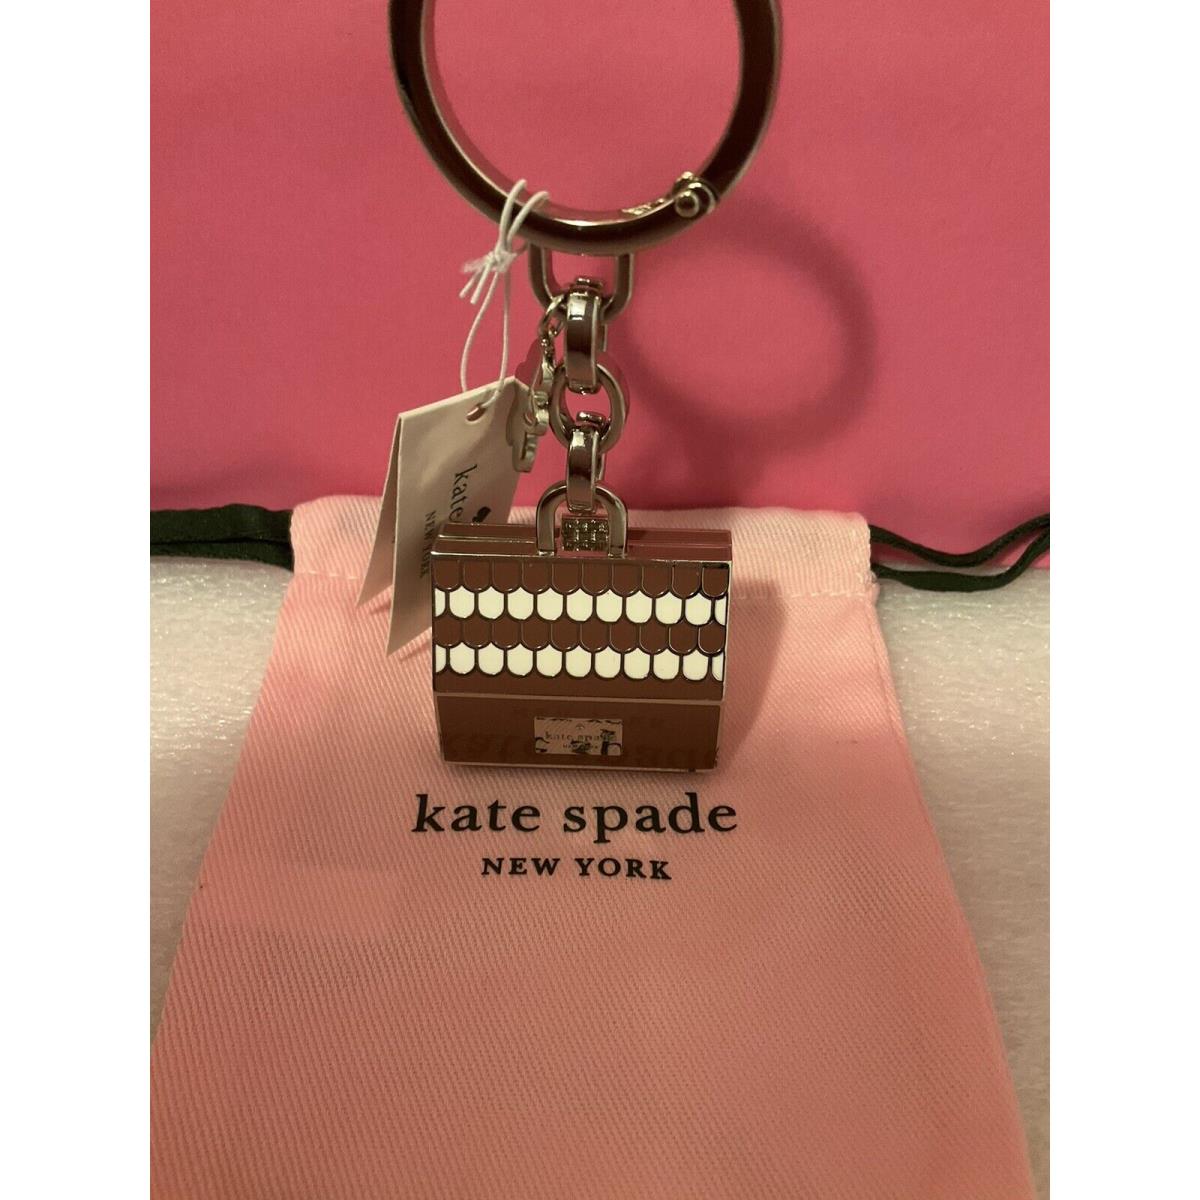 Kate Spade Gingerbread House Key Chain Bag Charm Novelty Gift w/ KS Dust Bag